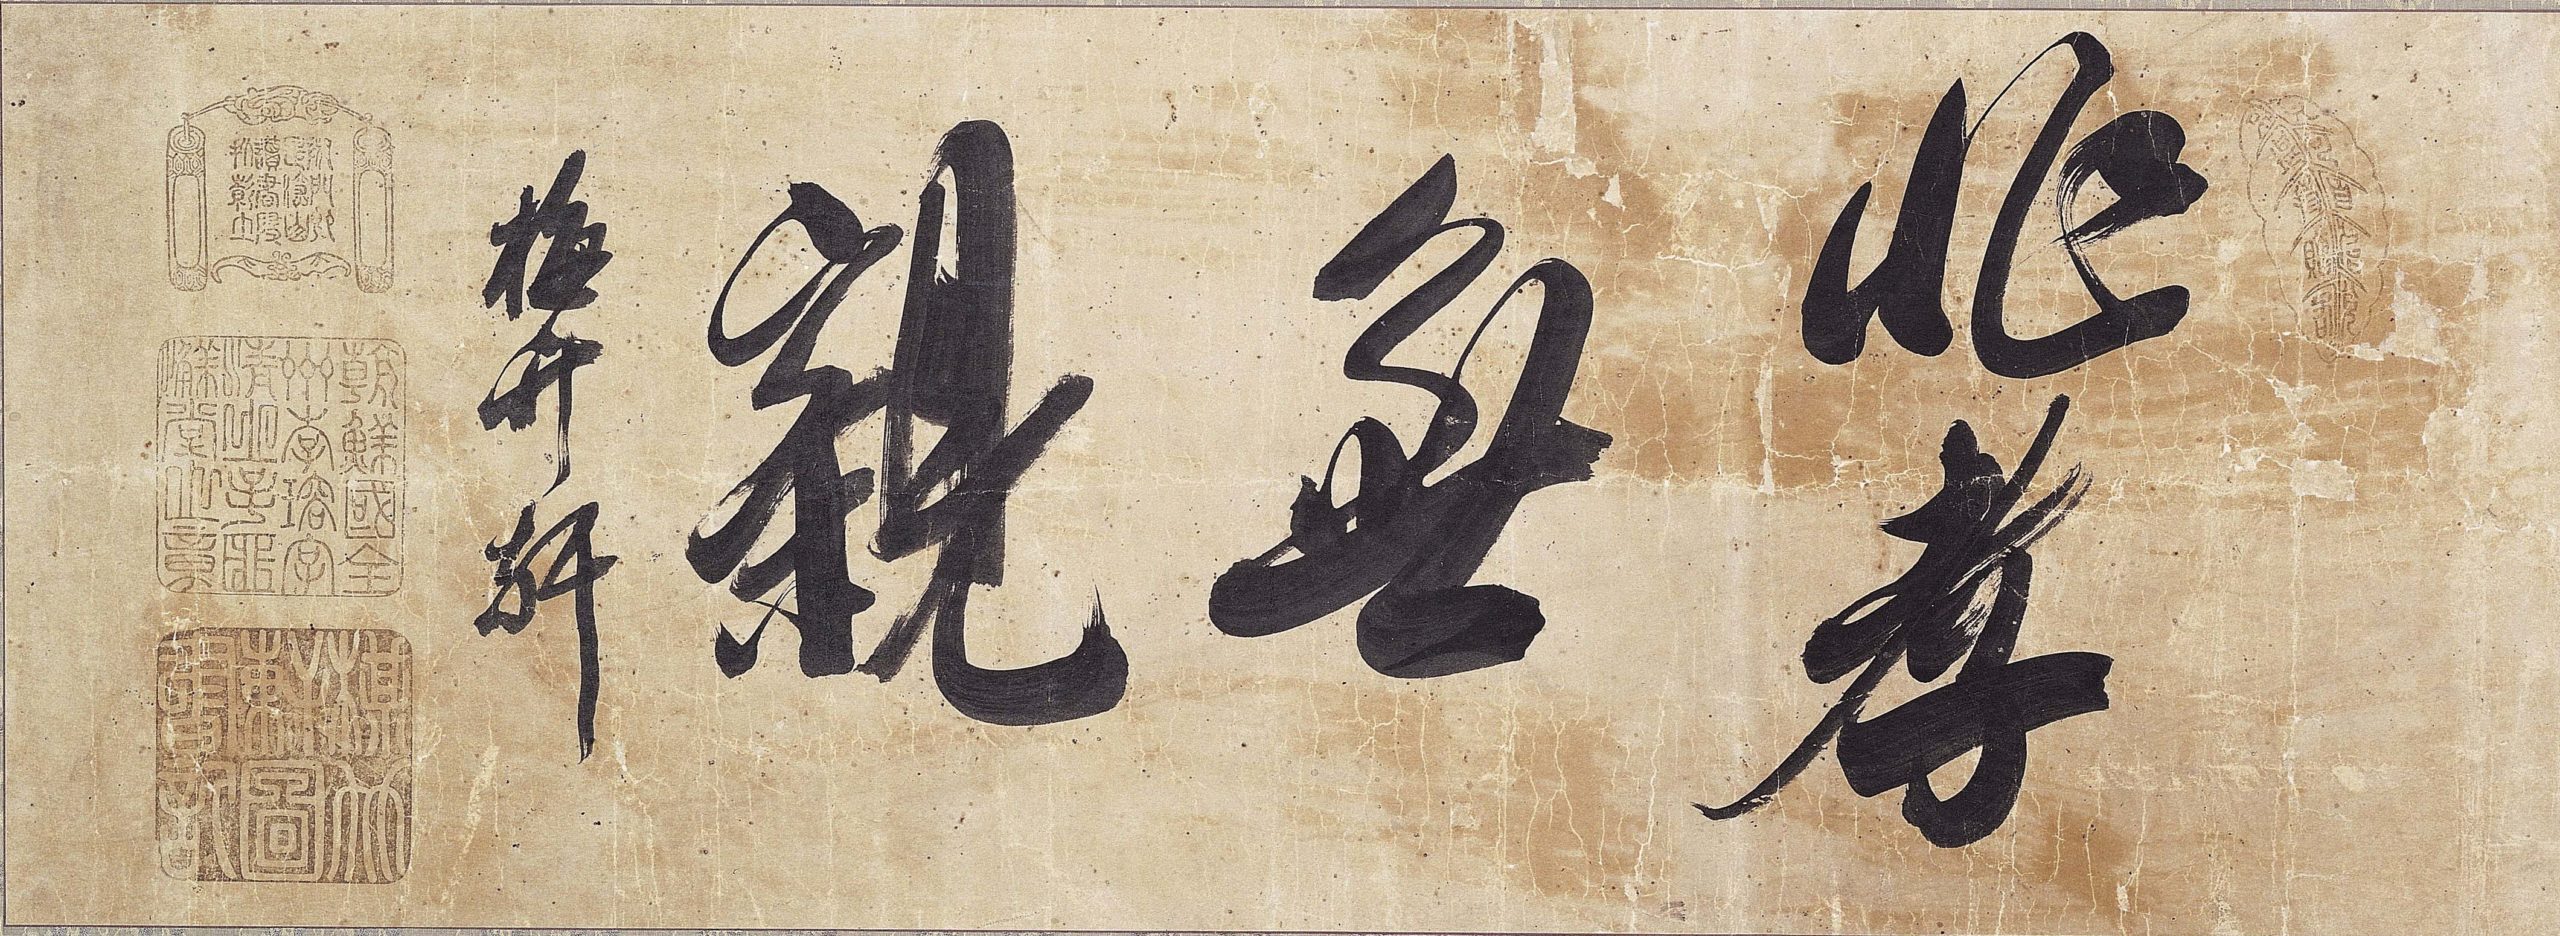 Prince Anpyeong, Calligraphy of Anpyeong-daegun, 15th century, Joseon period, ink on paper, 93 x 35 cm (Seokdang Museum of Dong-A University)